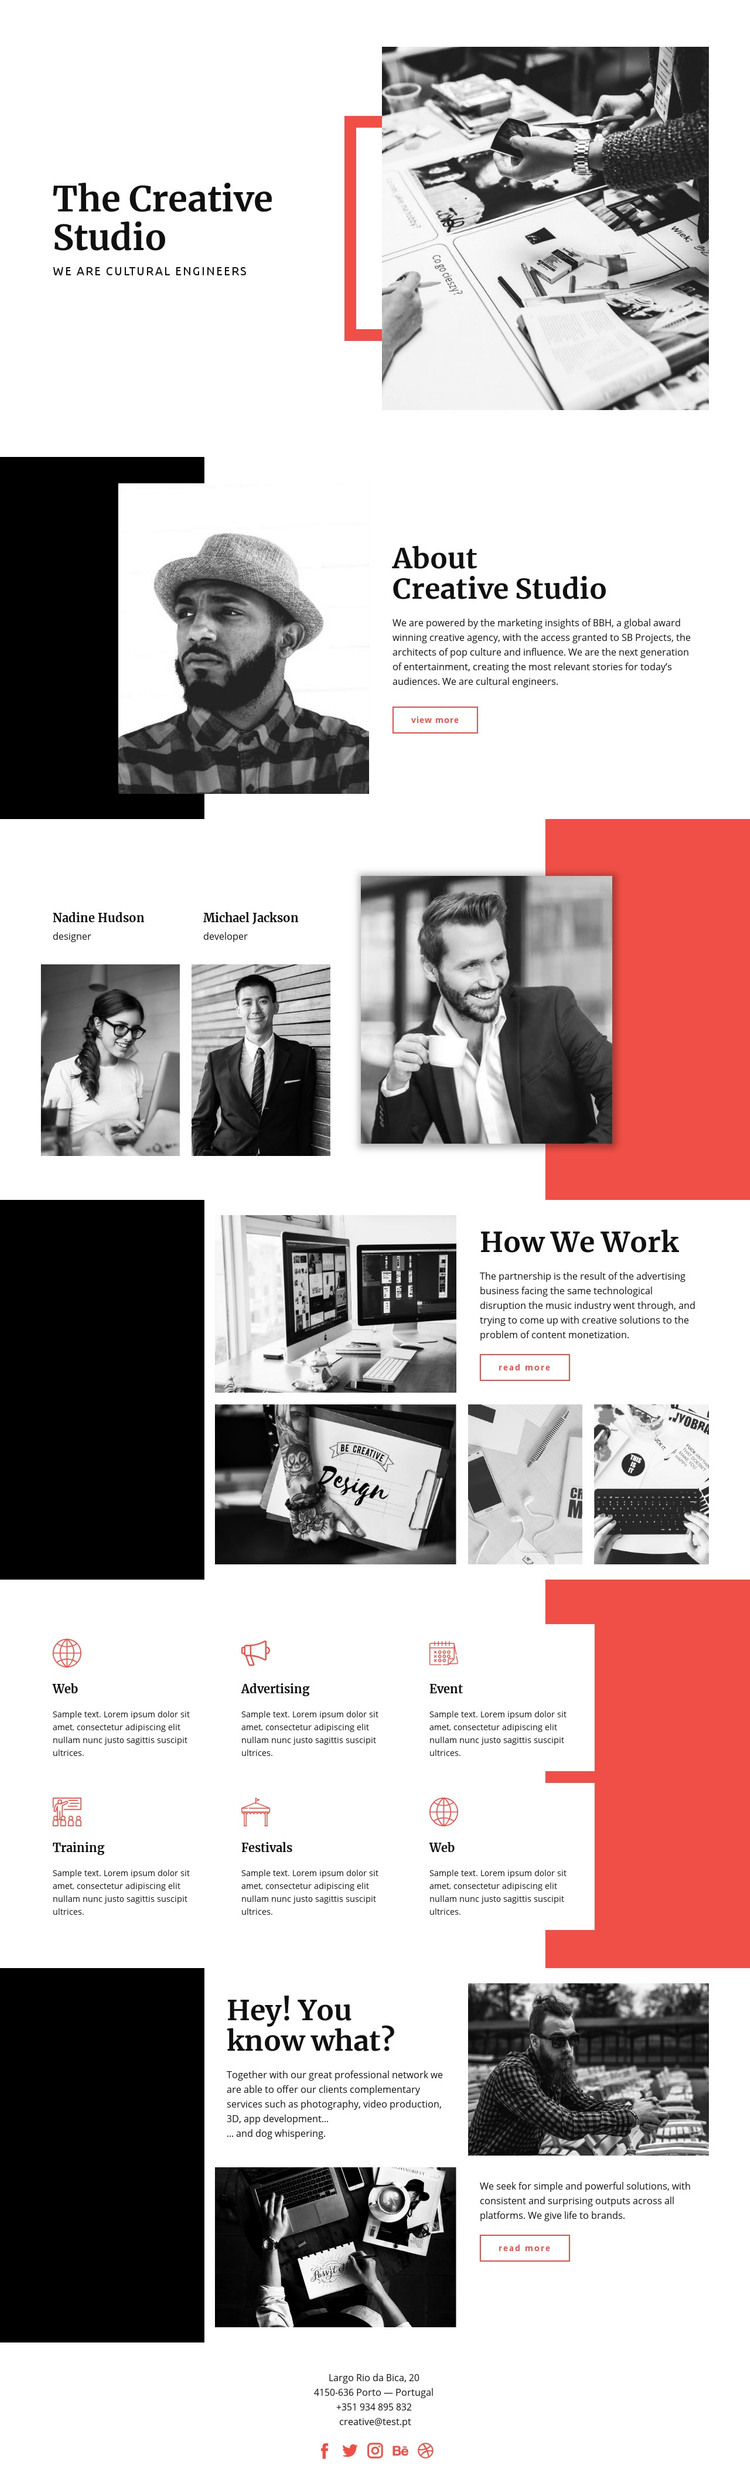 The Creative Studio Homepage Design